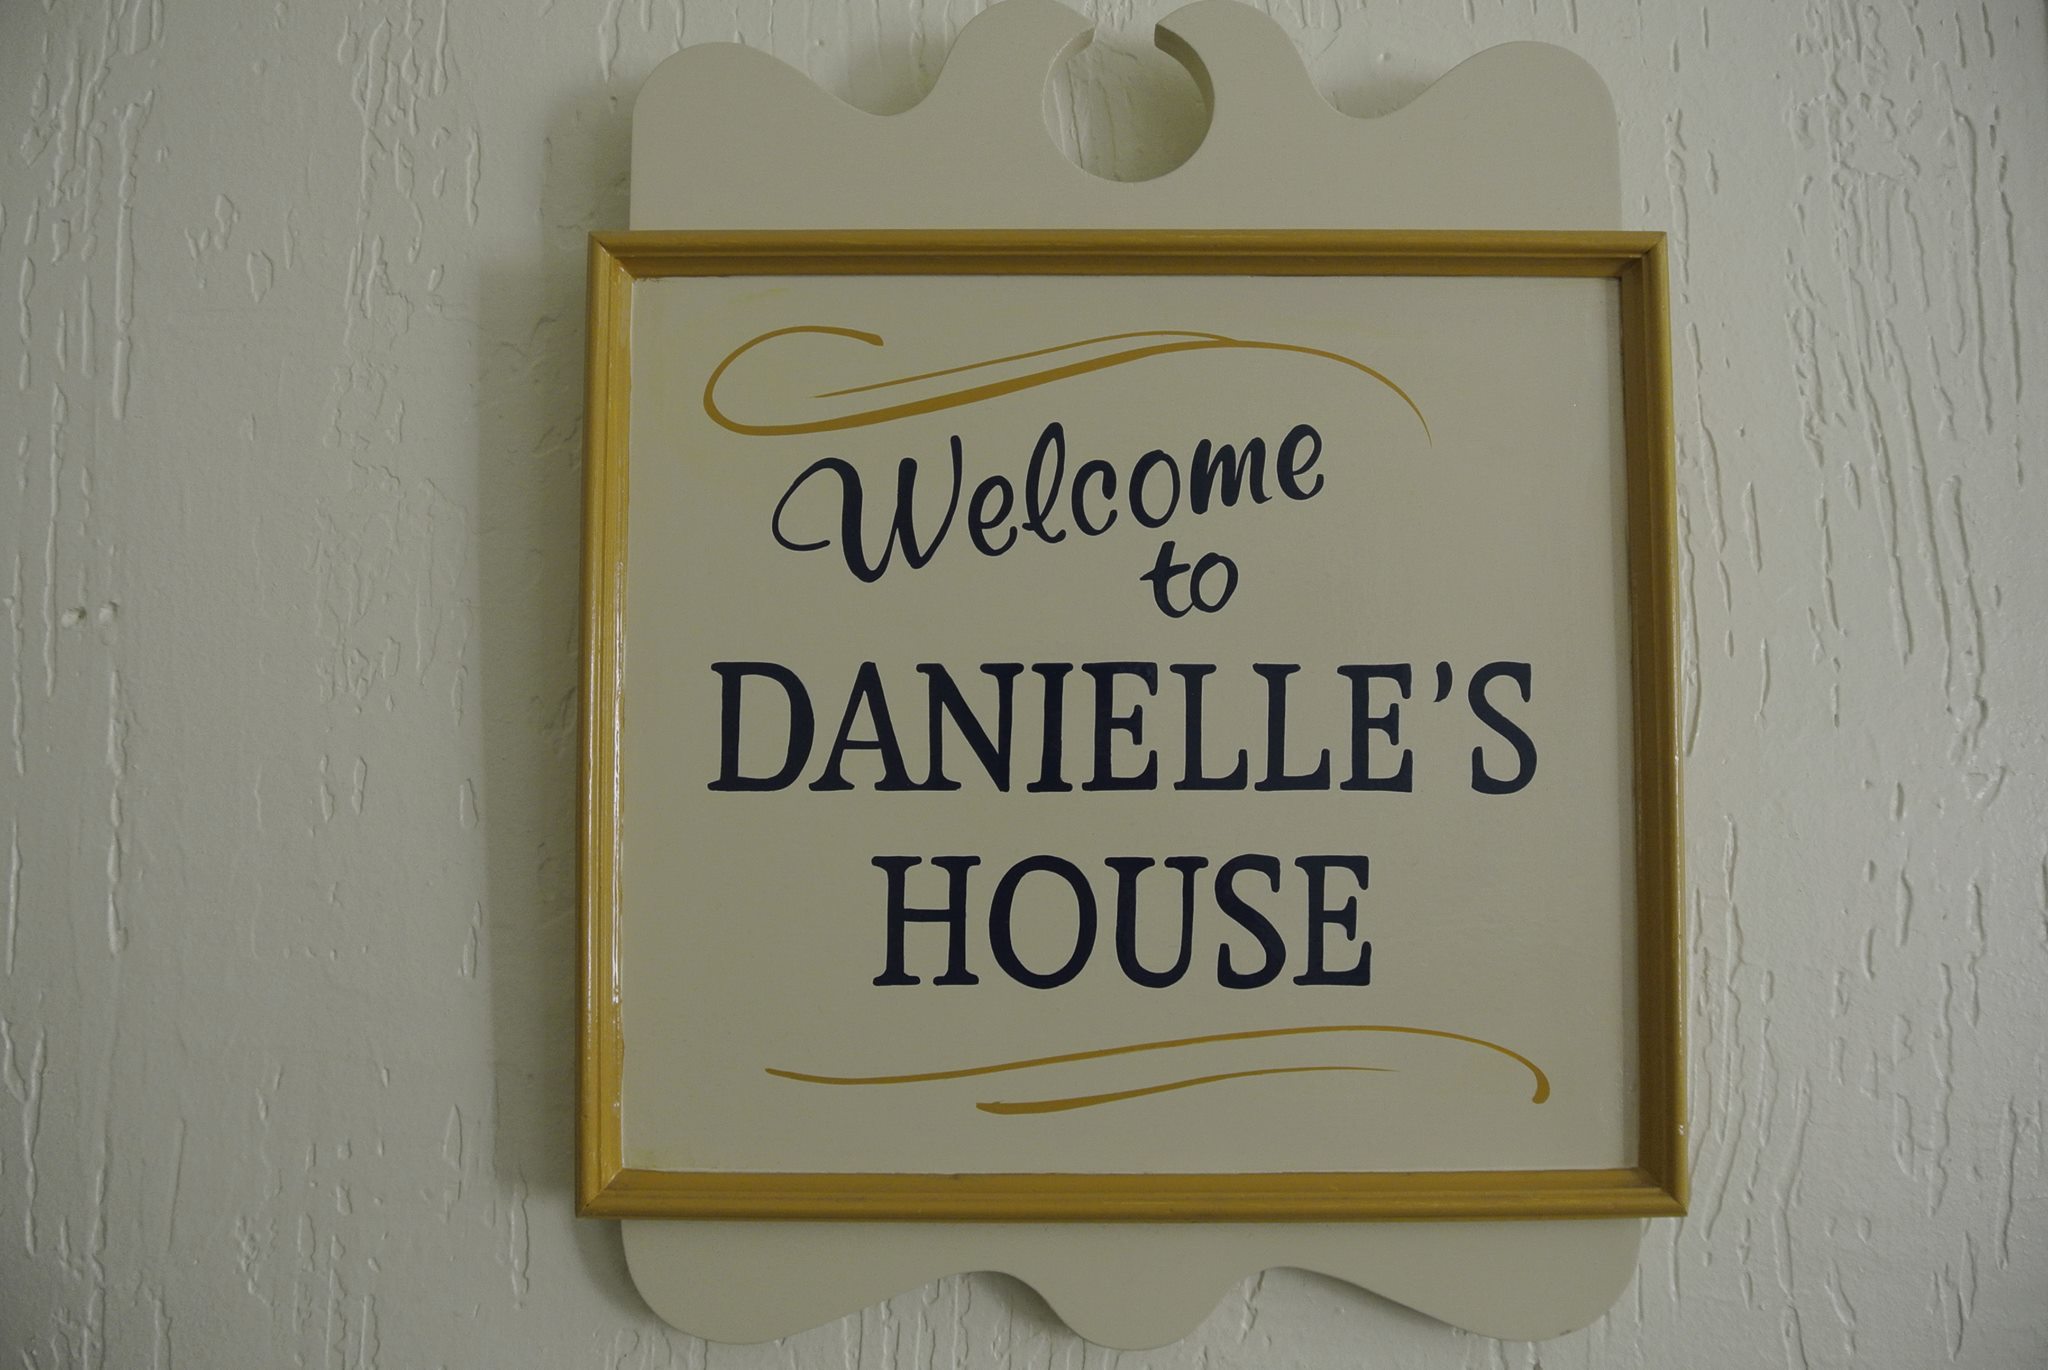 Danielleâ€™s House